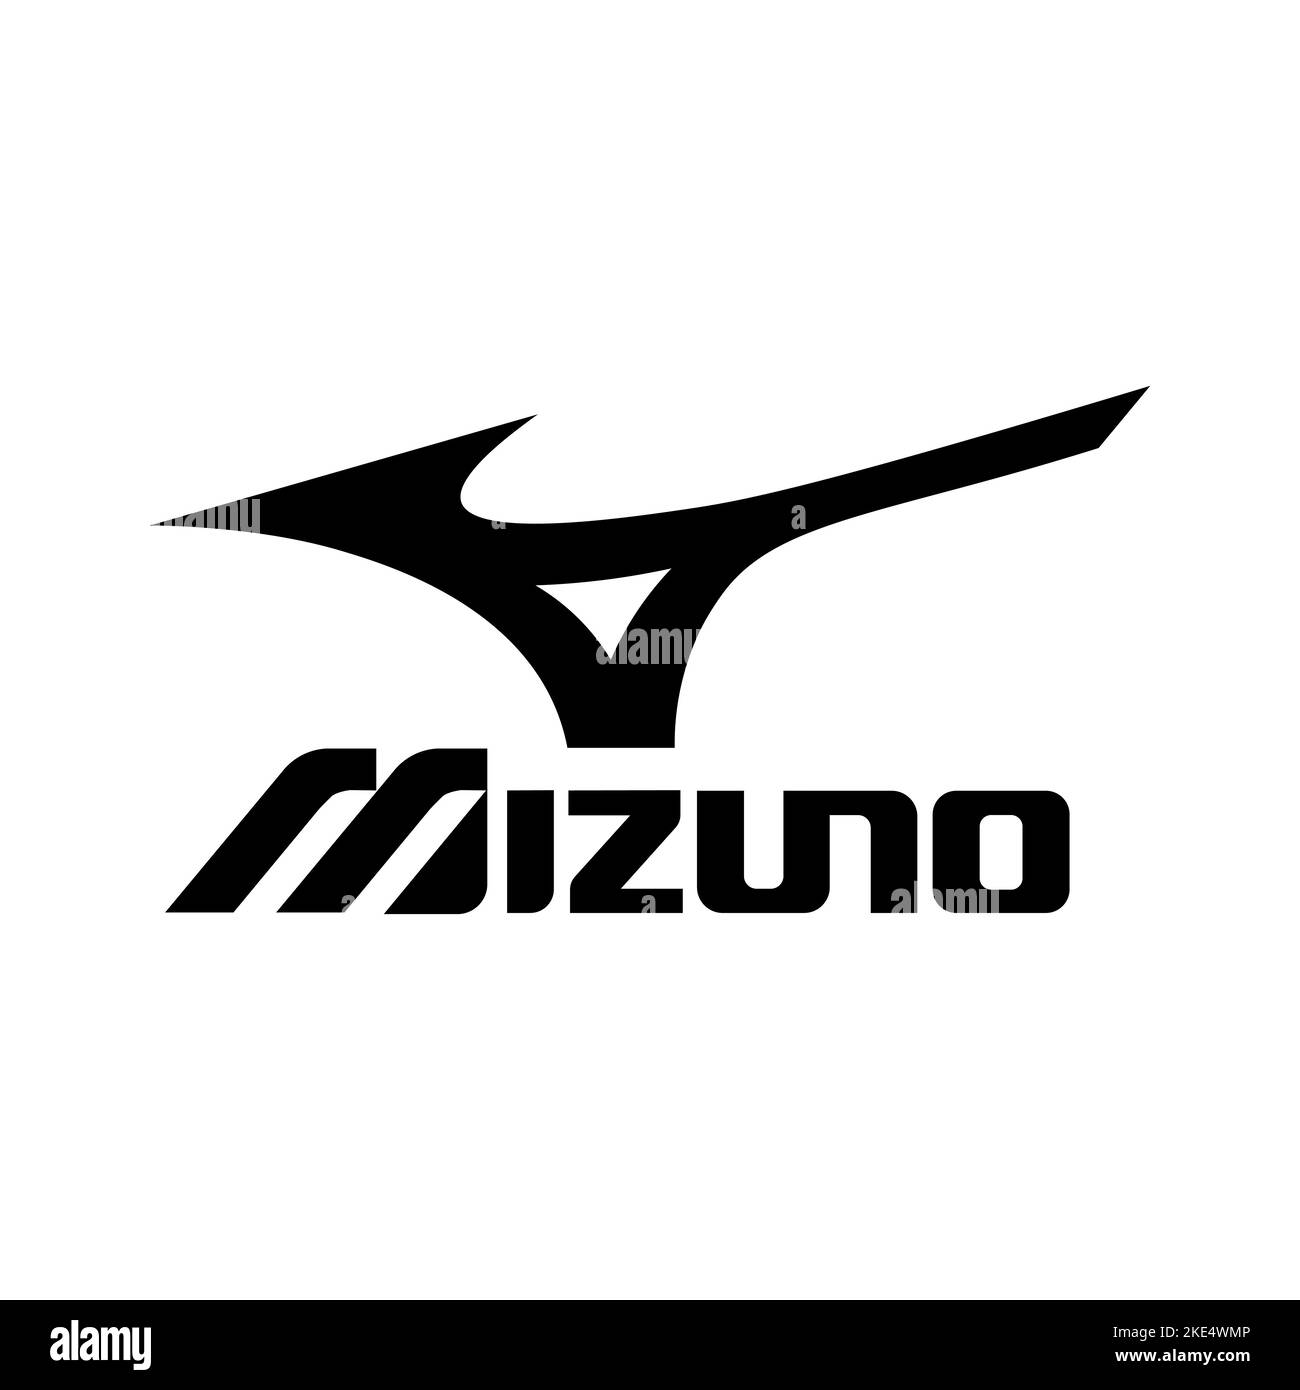 Mizuno logo hi-res stock photography and images - Alamy